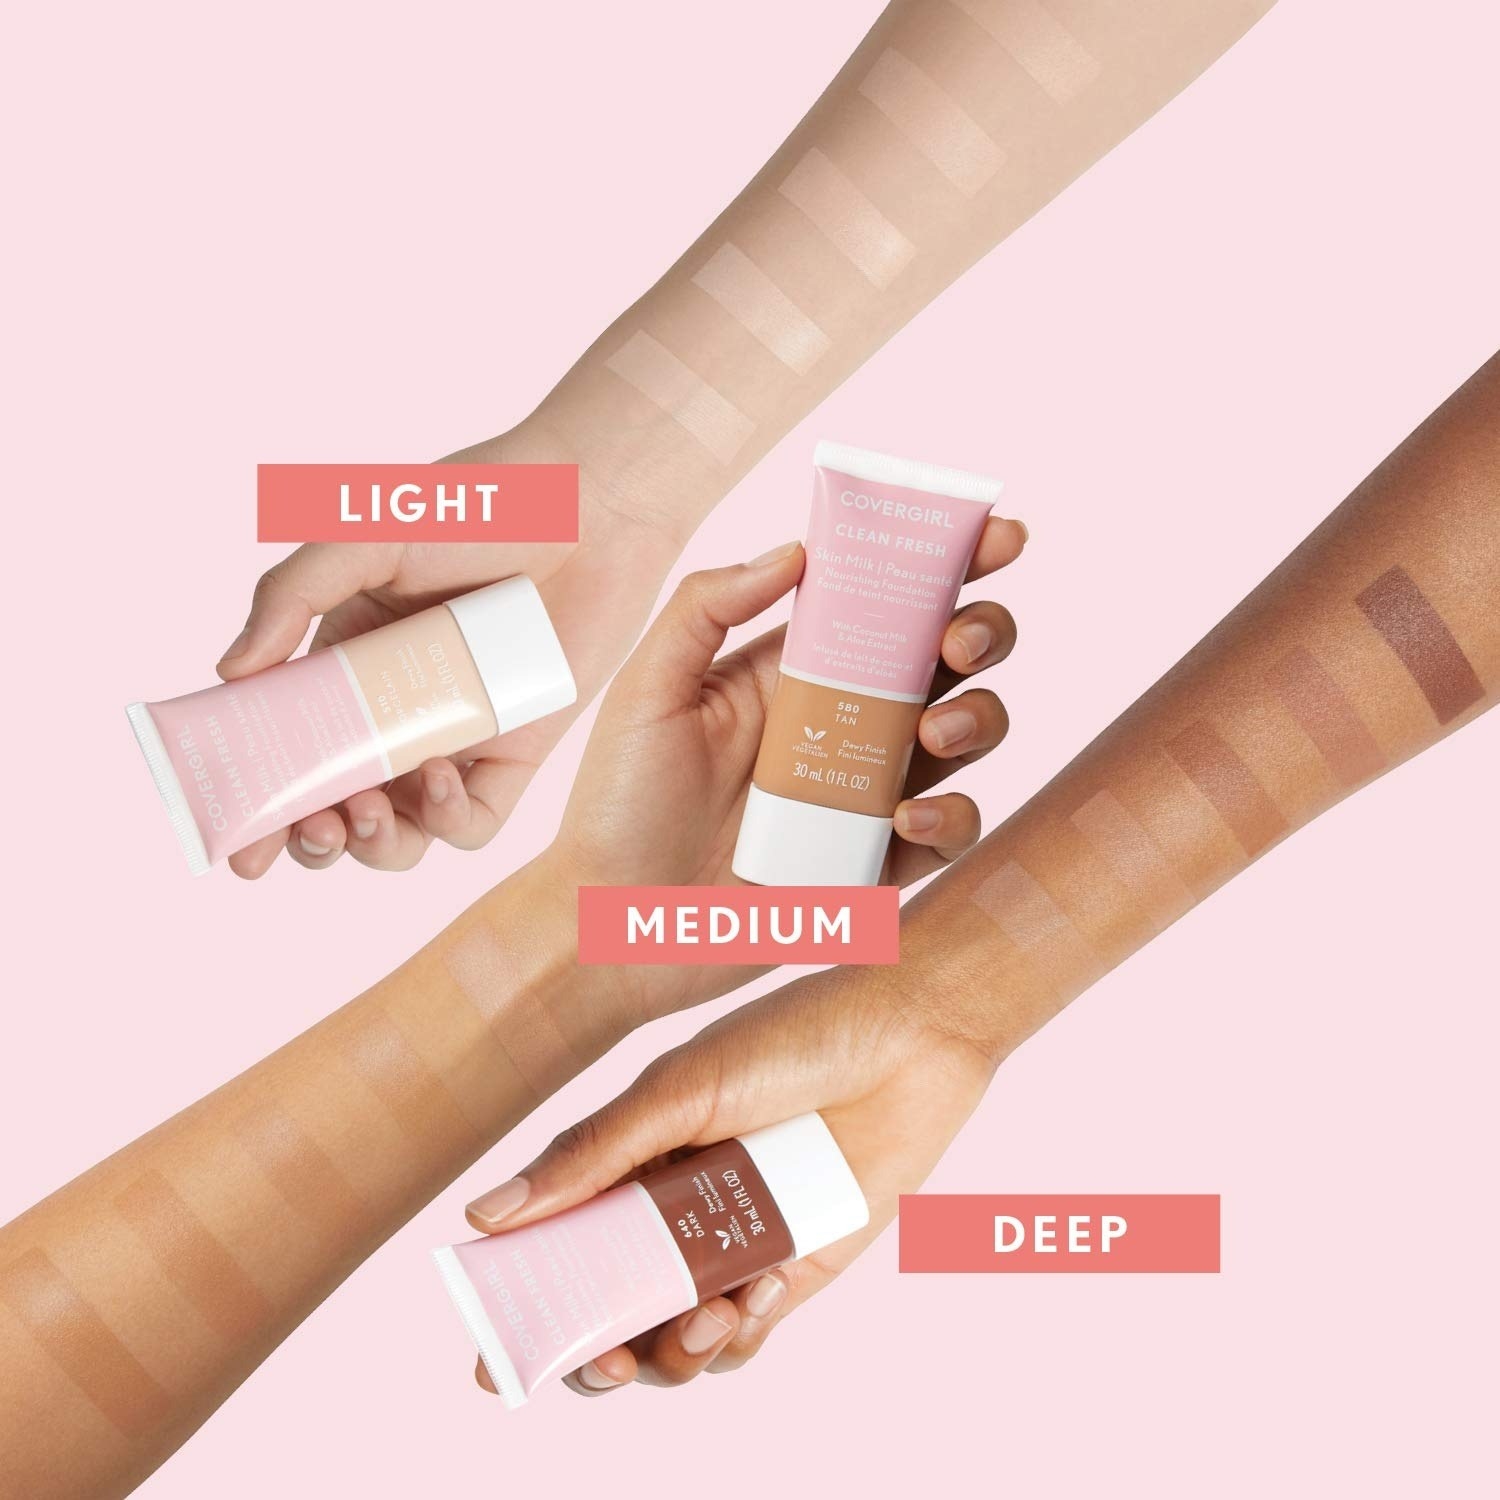 the foundation shown on light. medium, and deep skin tones